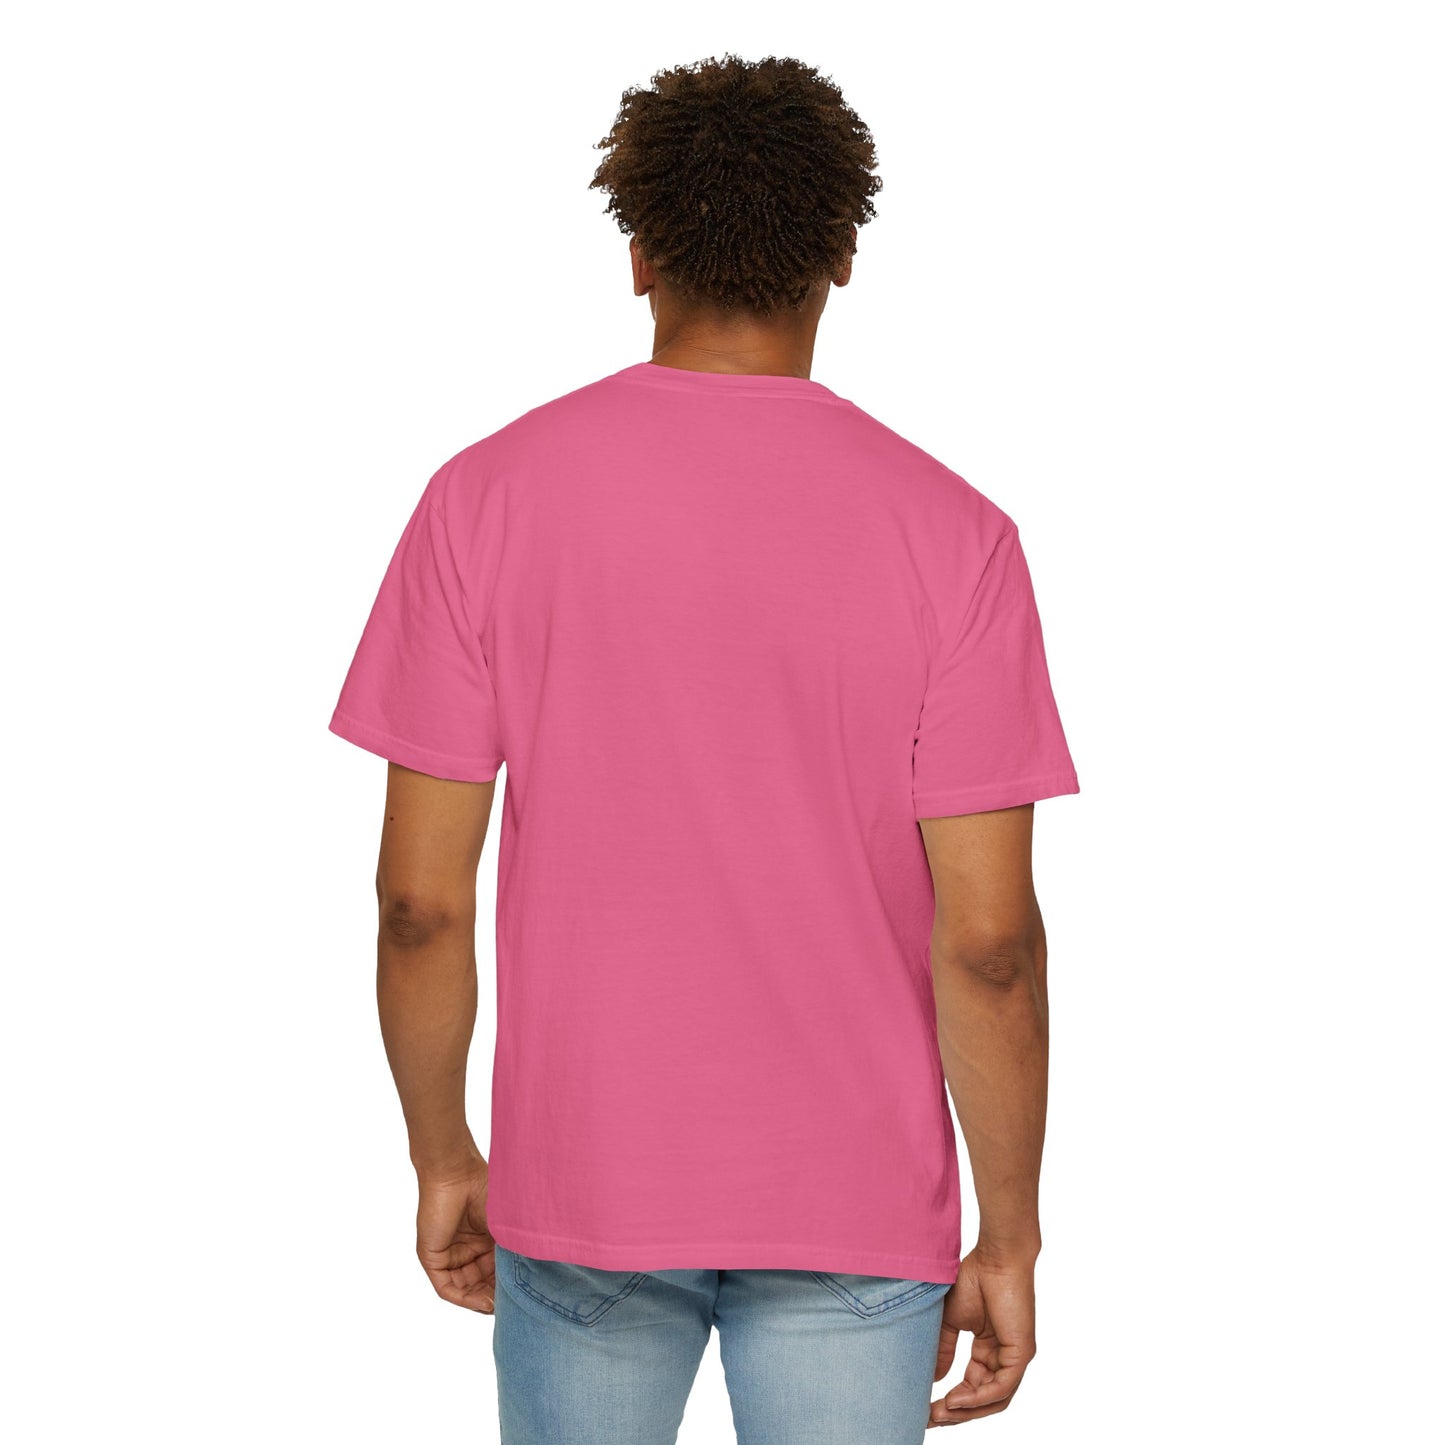 Life status currently holding - Unisex Garment-Dyed T-shirt